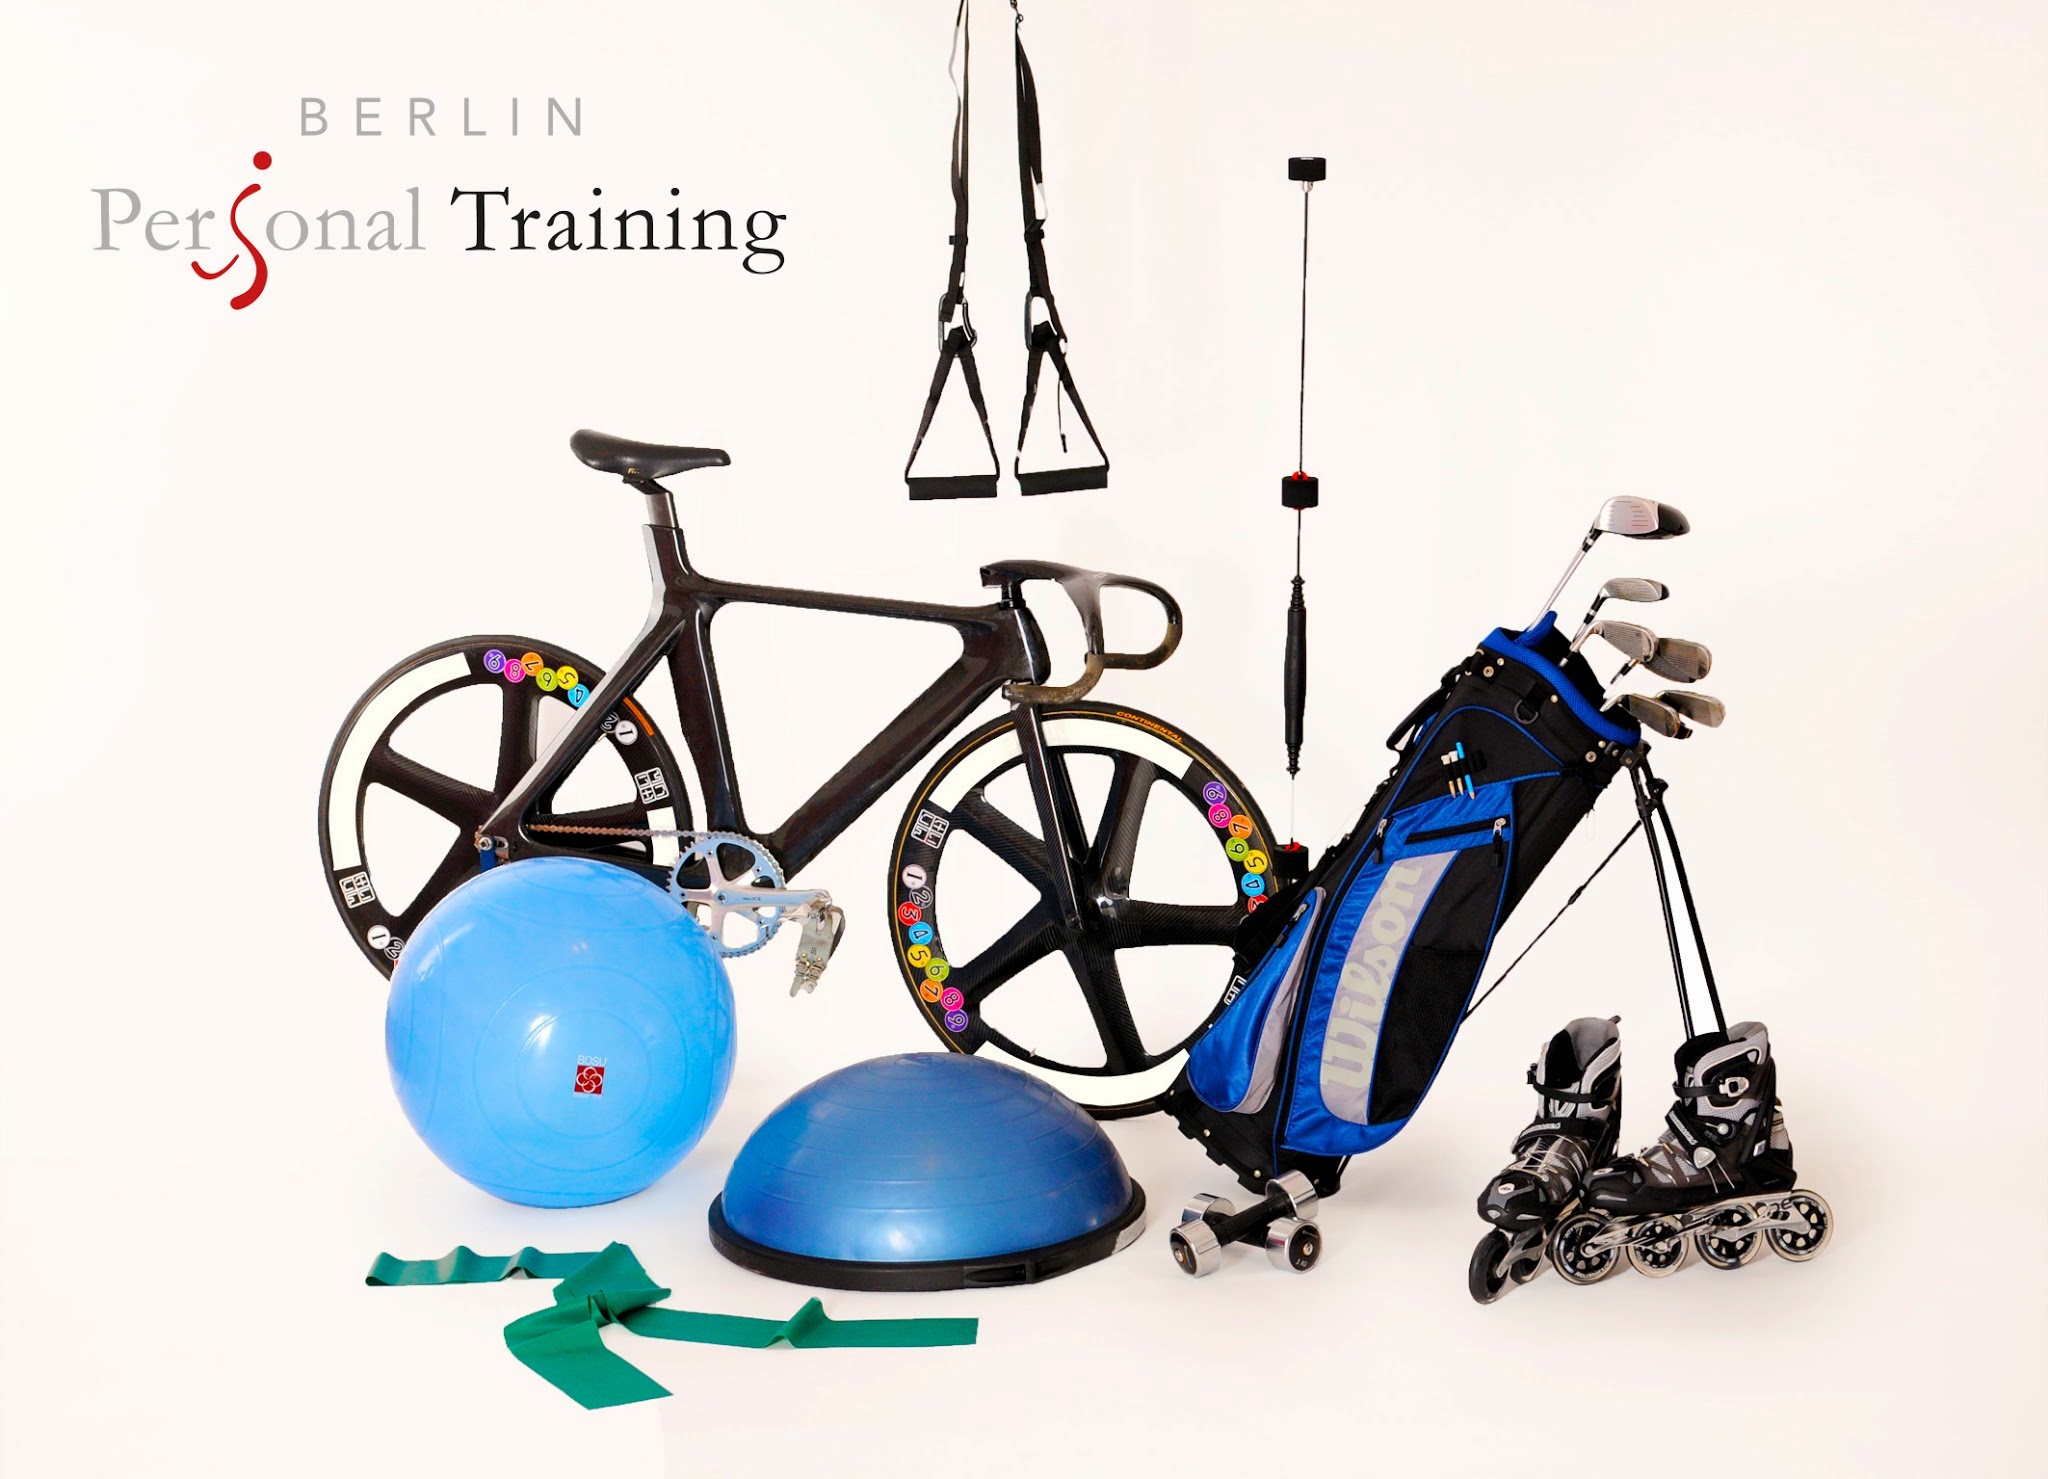 Berlin Personal Training